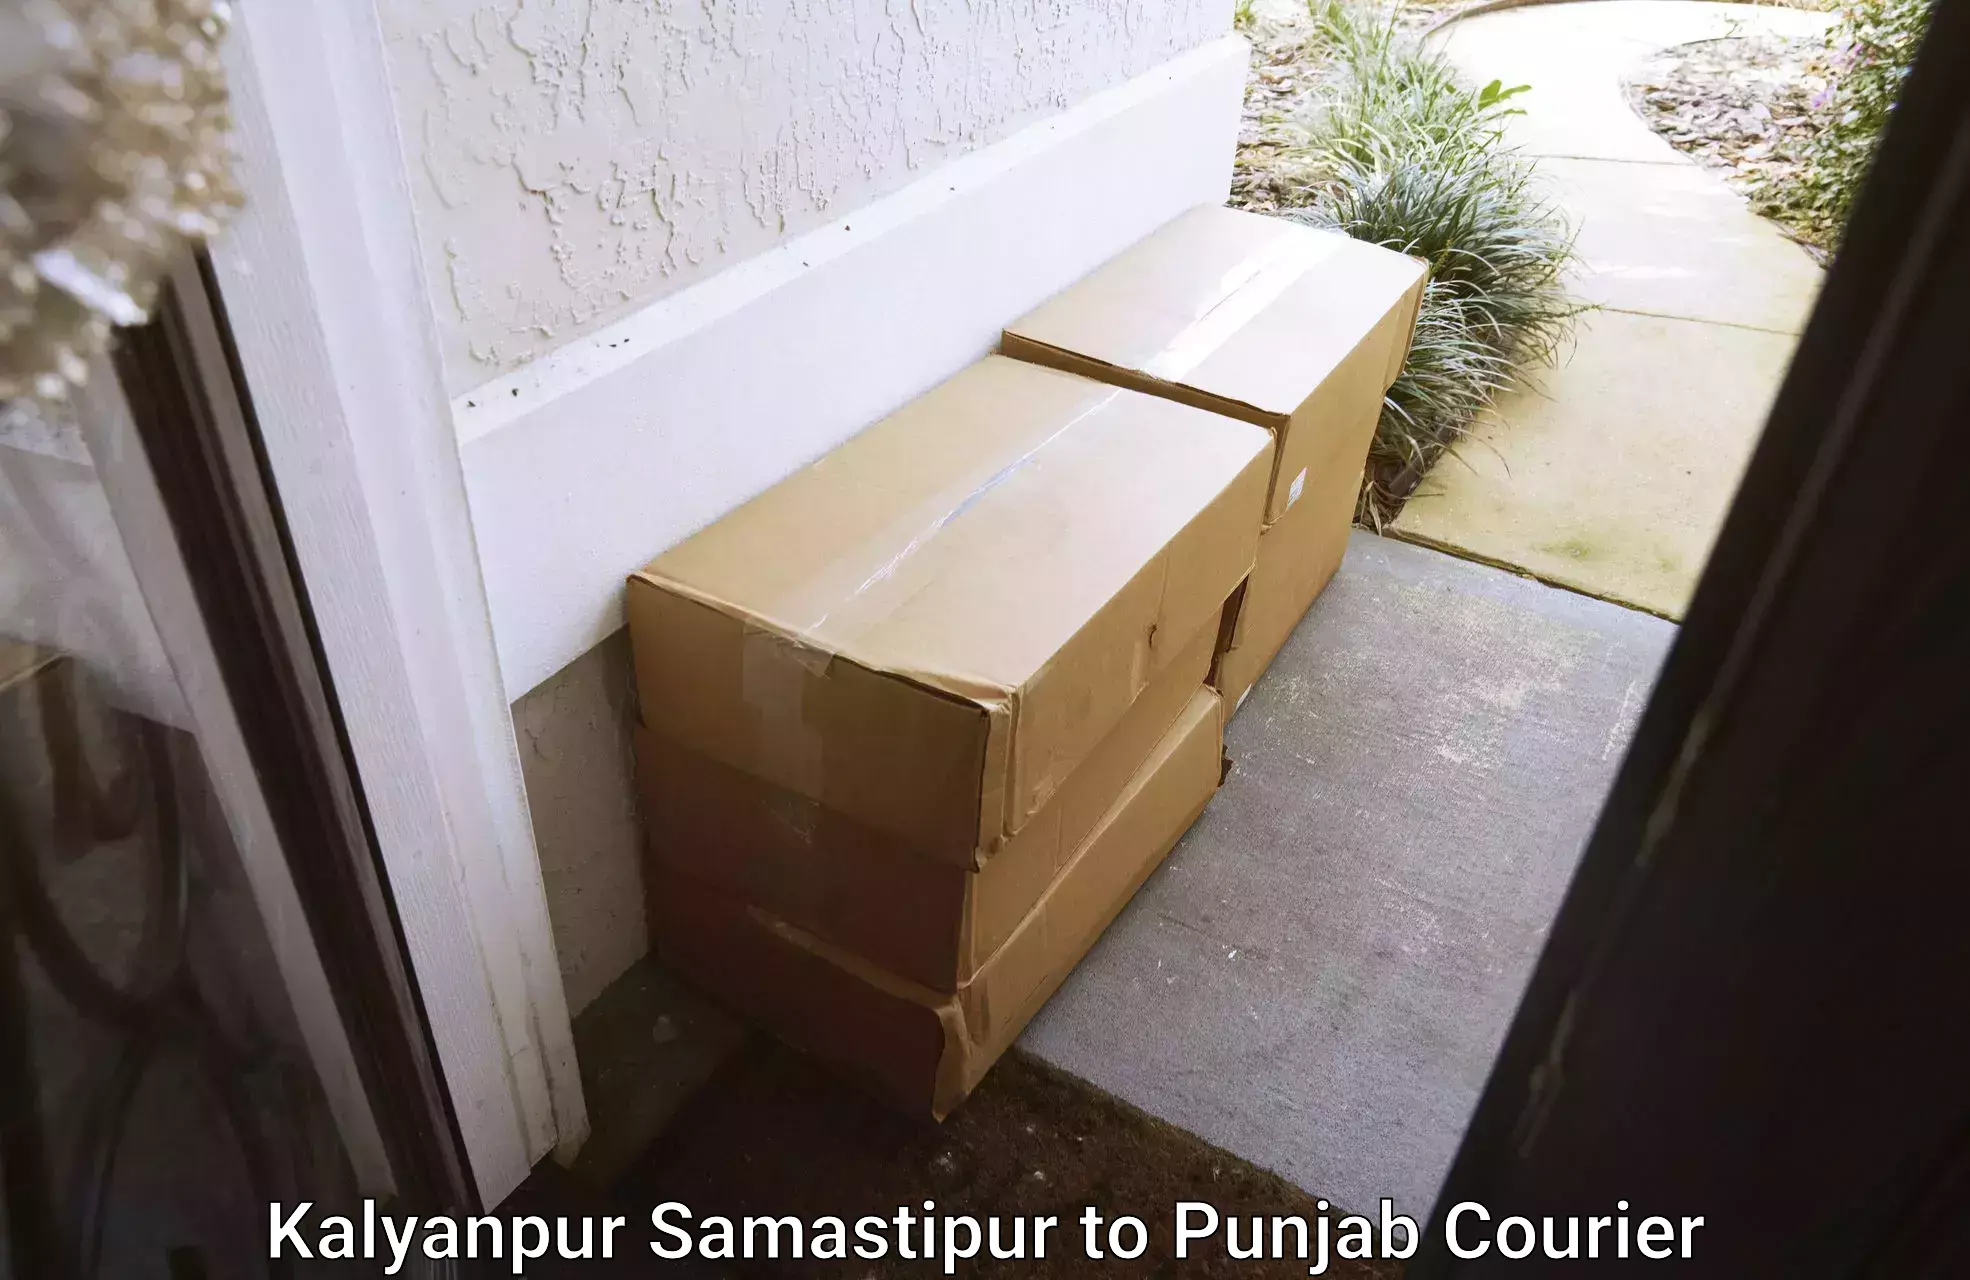 Home goods moving company Kalyanpur Samastipur to Punjab